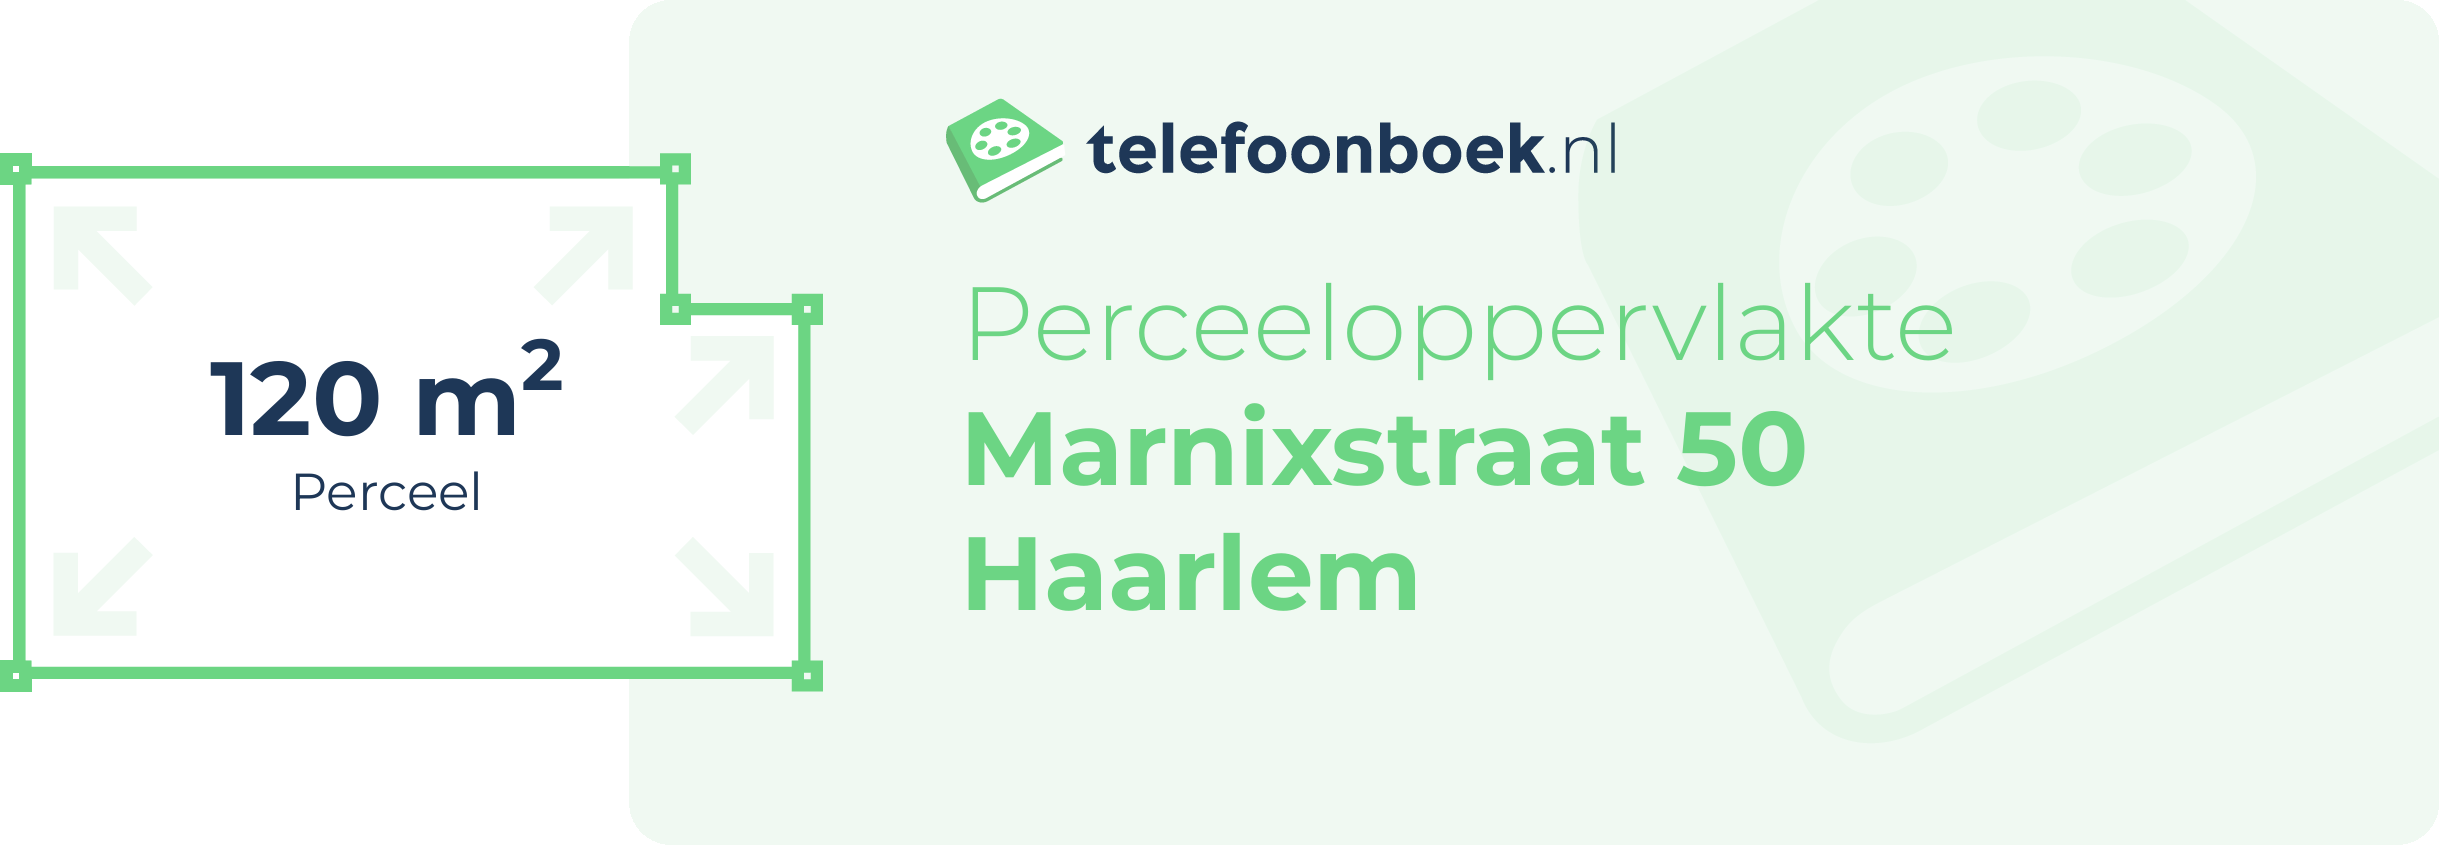 Perceeloppervlakte Marnixstraat 50 Haarlem